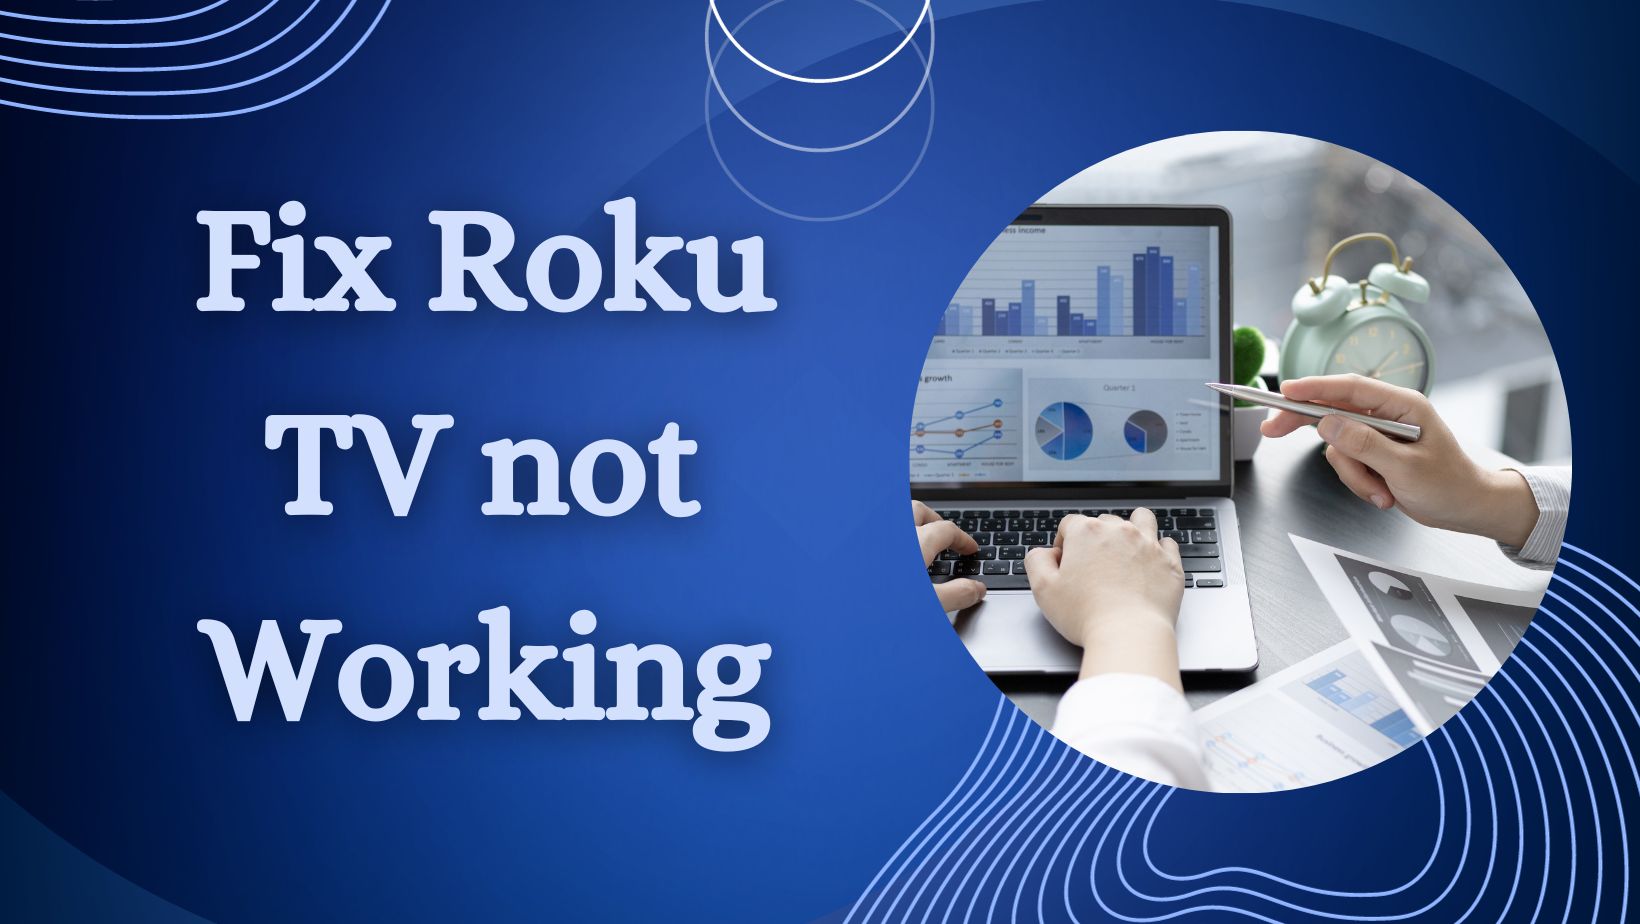 Roku TV HELP Center